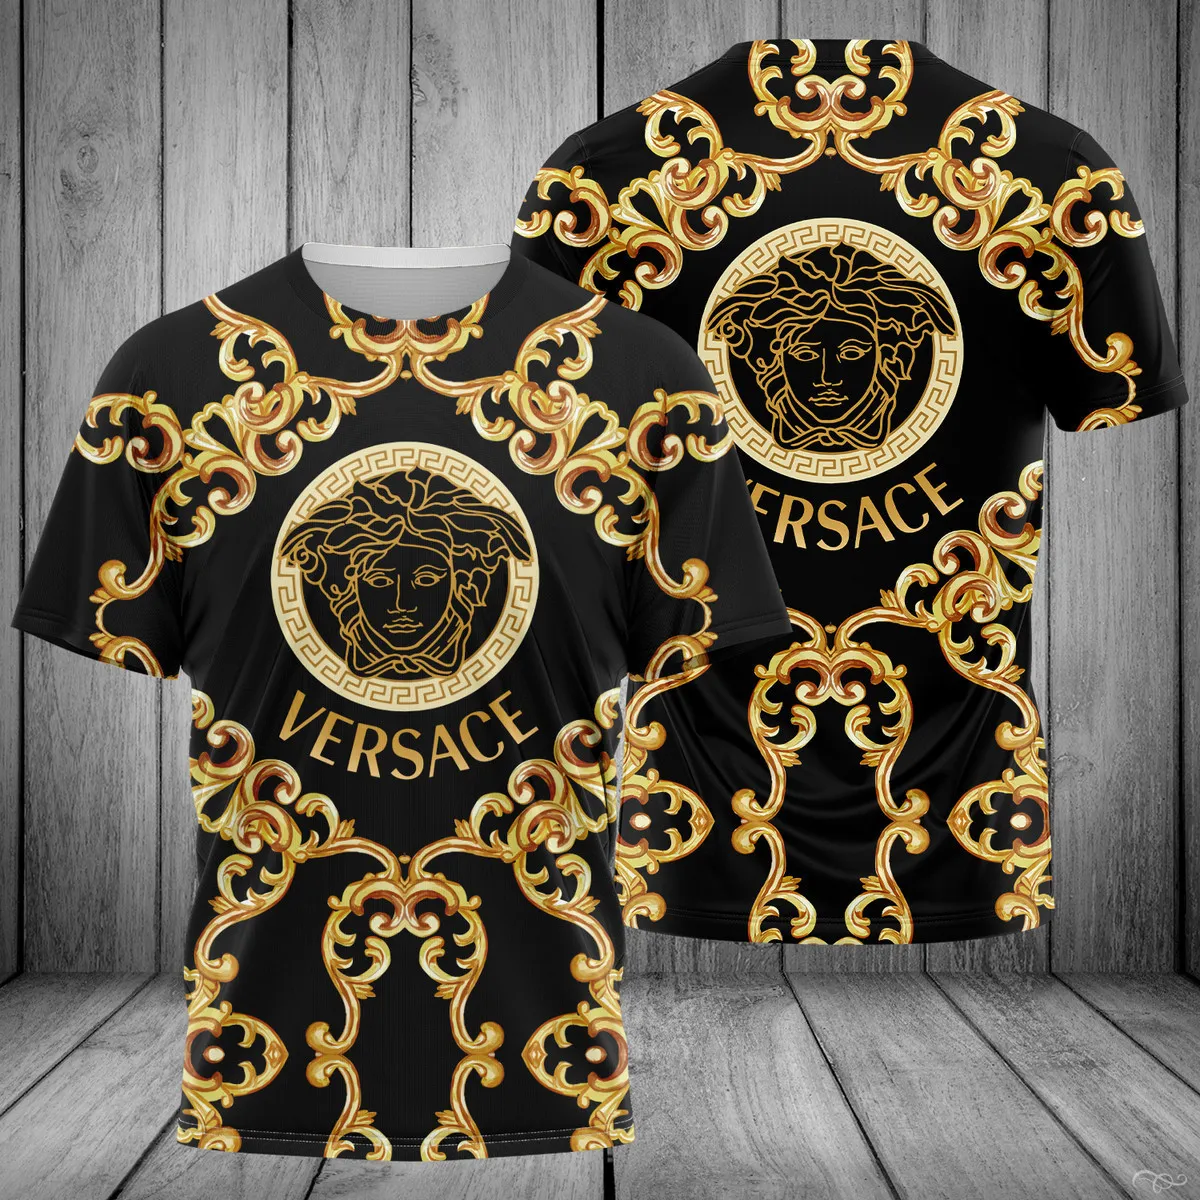 Versace Medusa Golden Pattern Black T Shirt Luxury Outfit Fashion